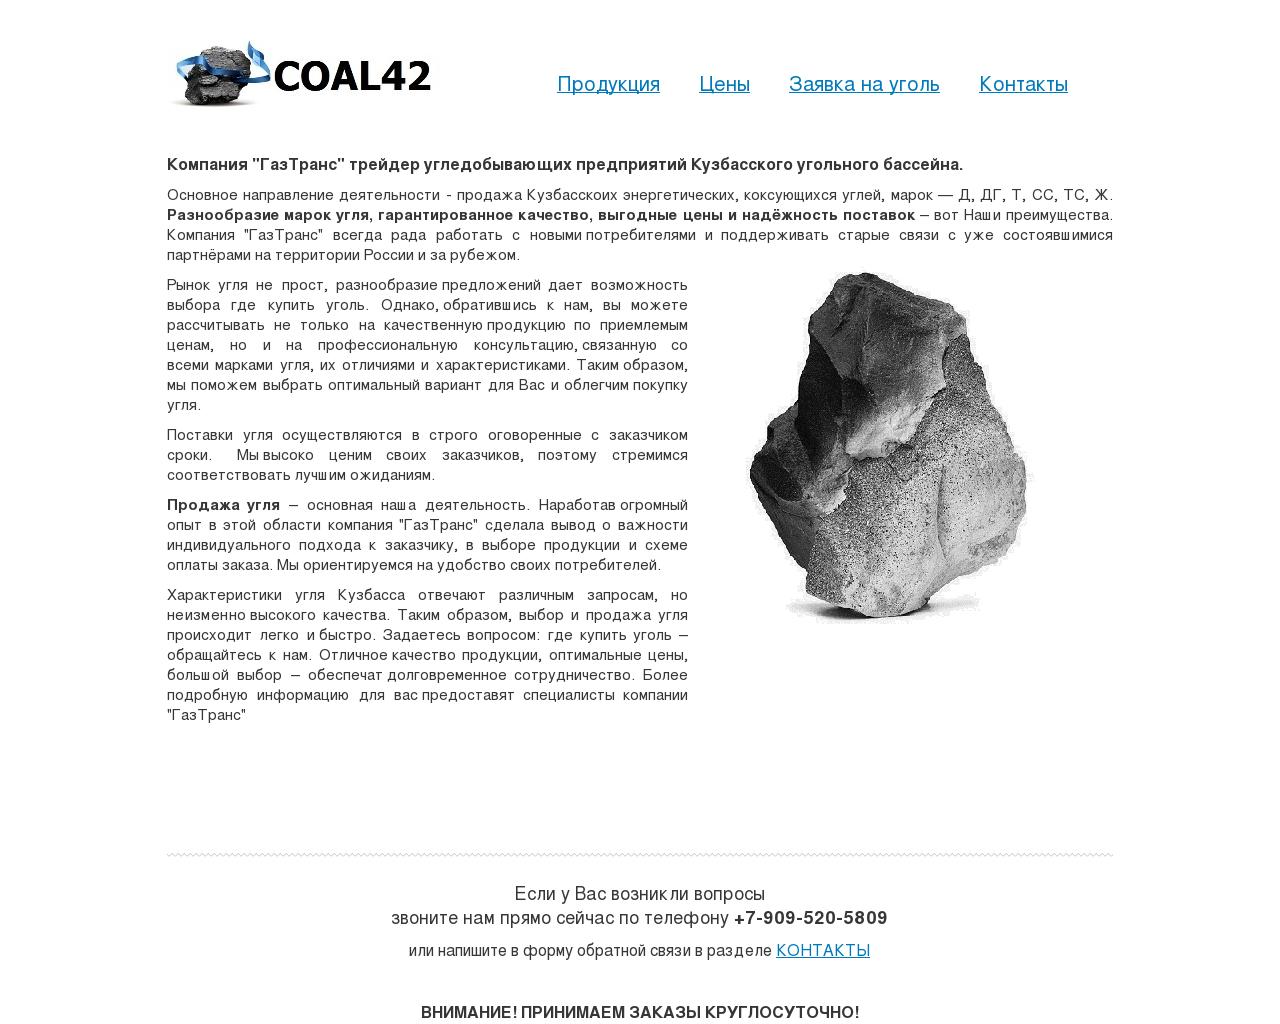 Изображение сайта coal42.ru в разрешении 1280x1024